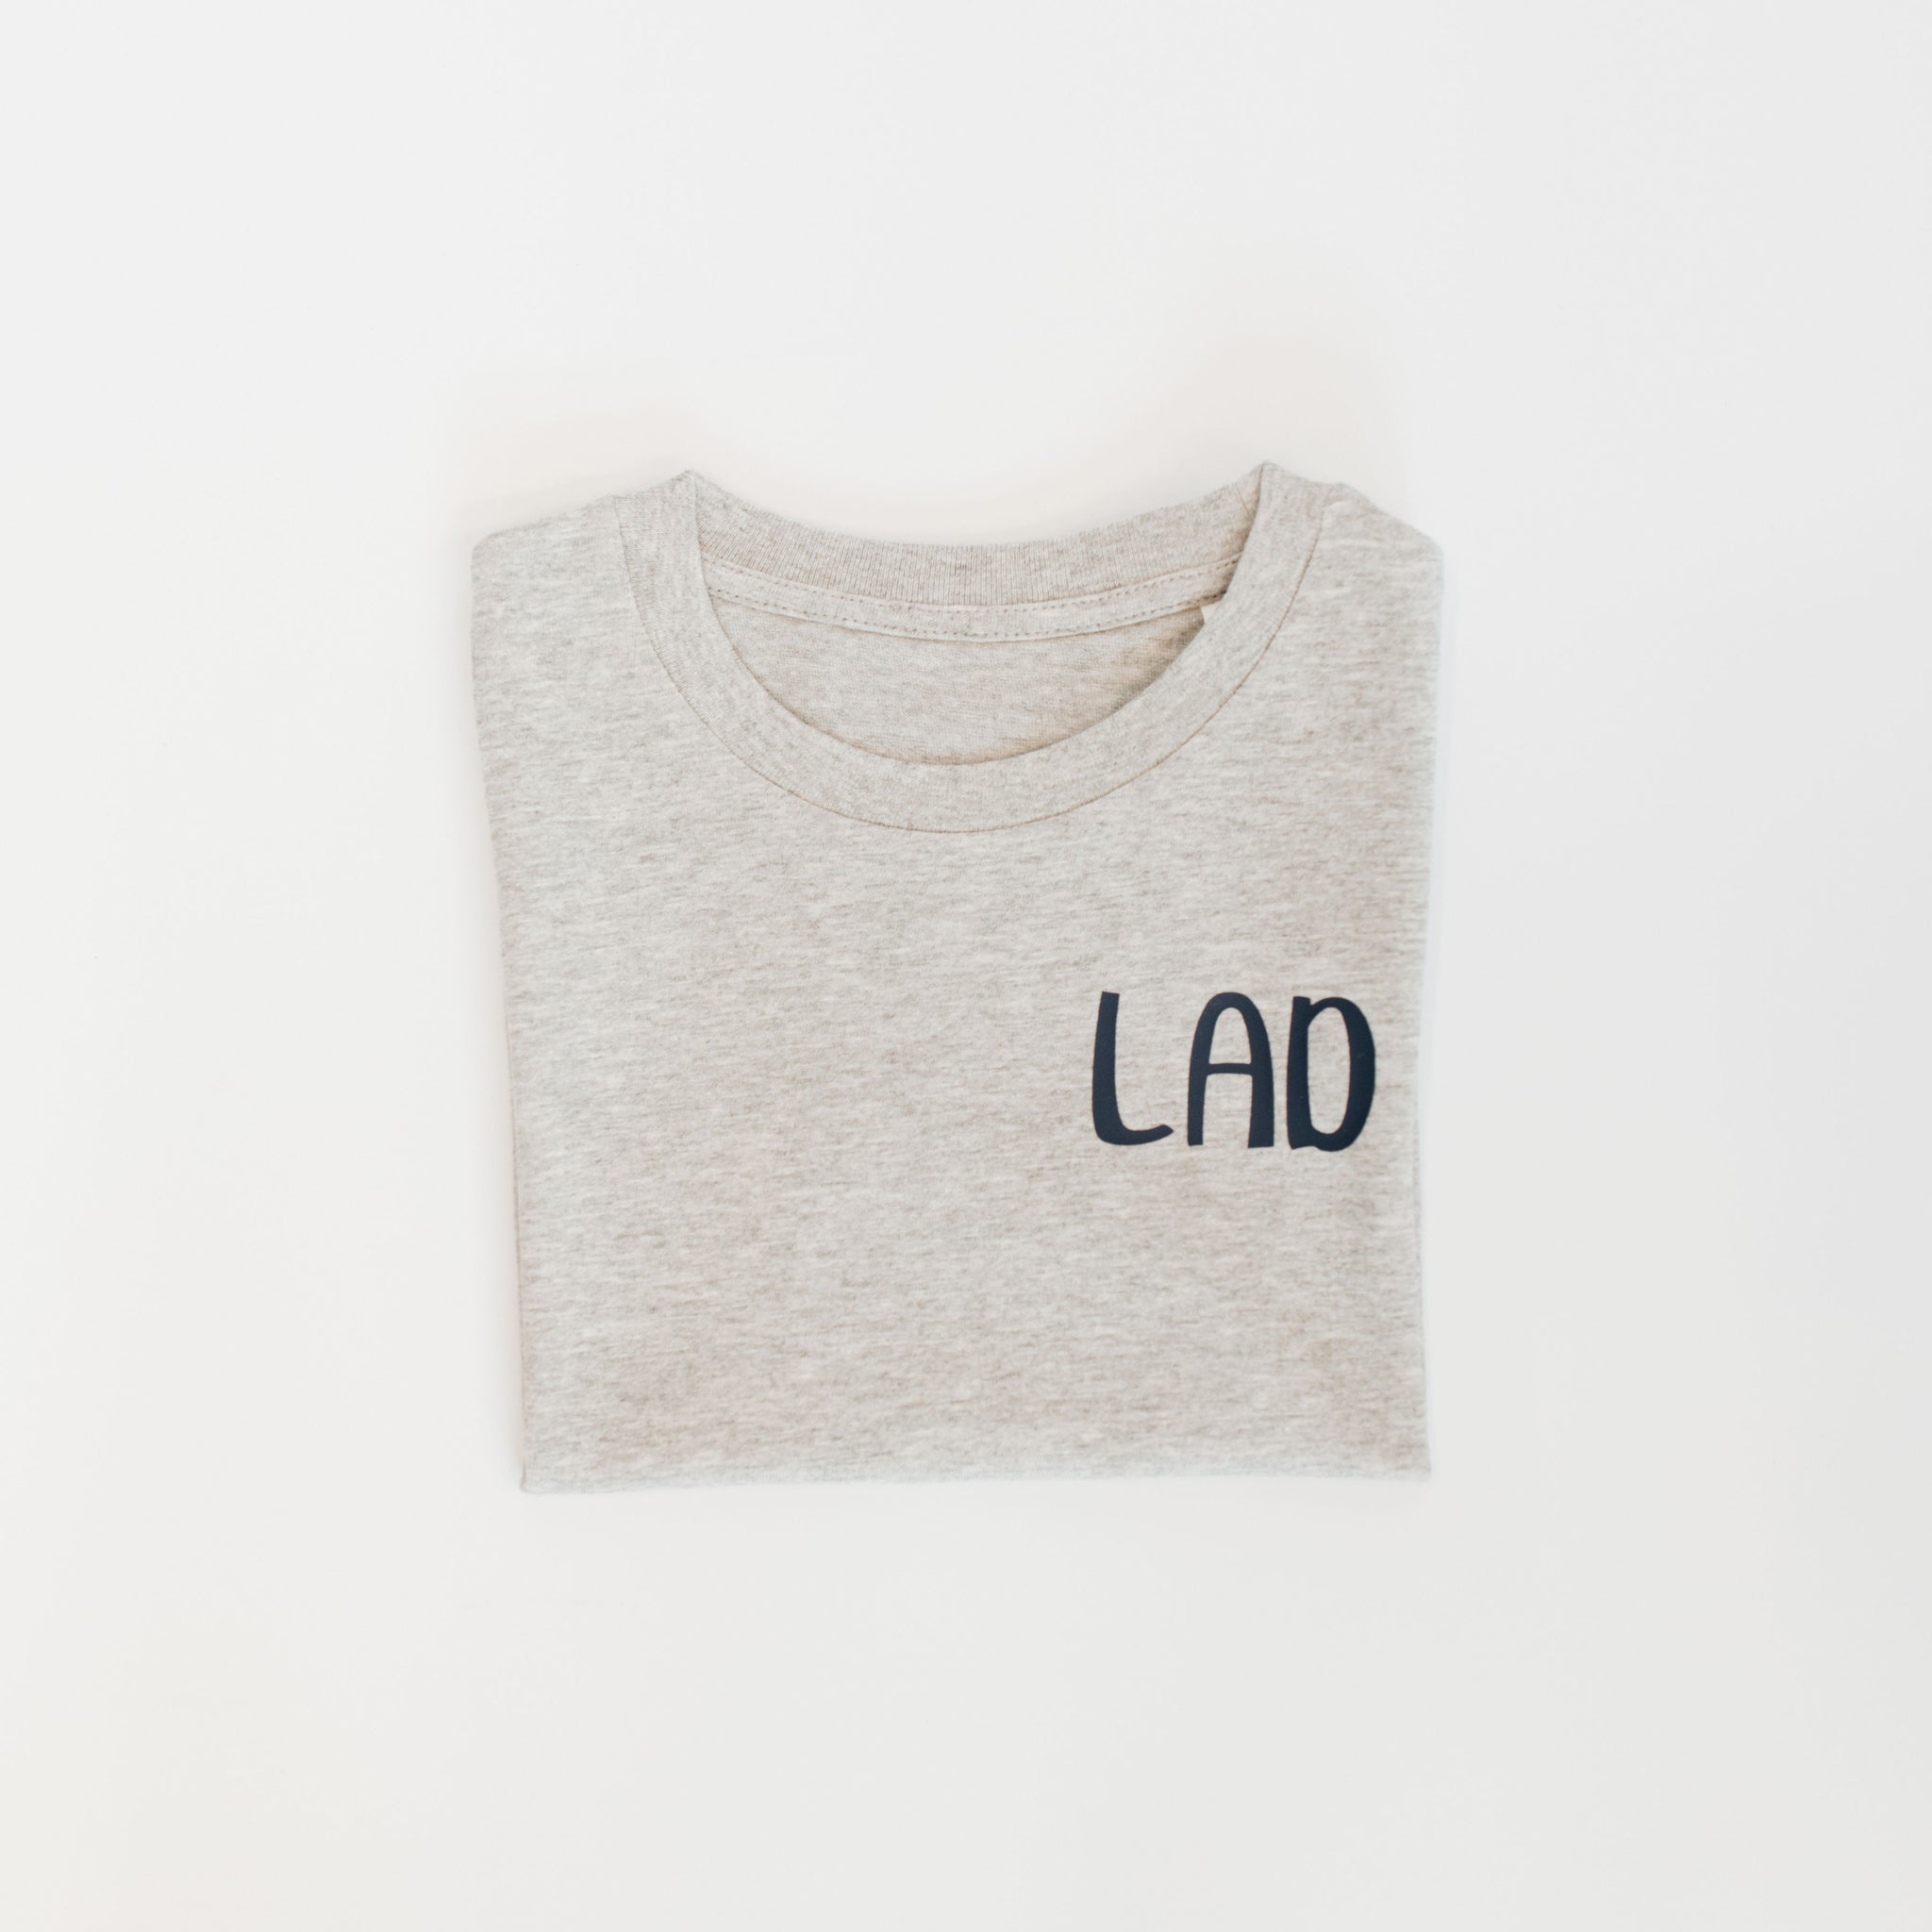 Lad T-shirt